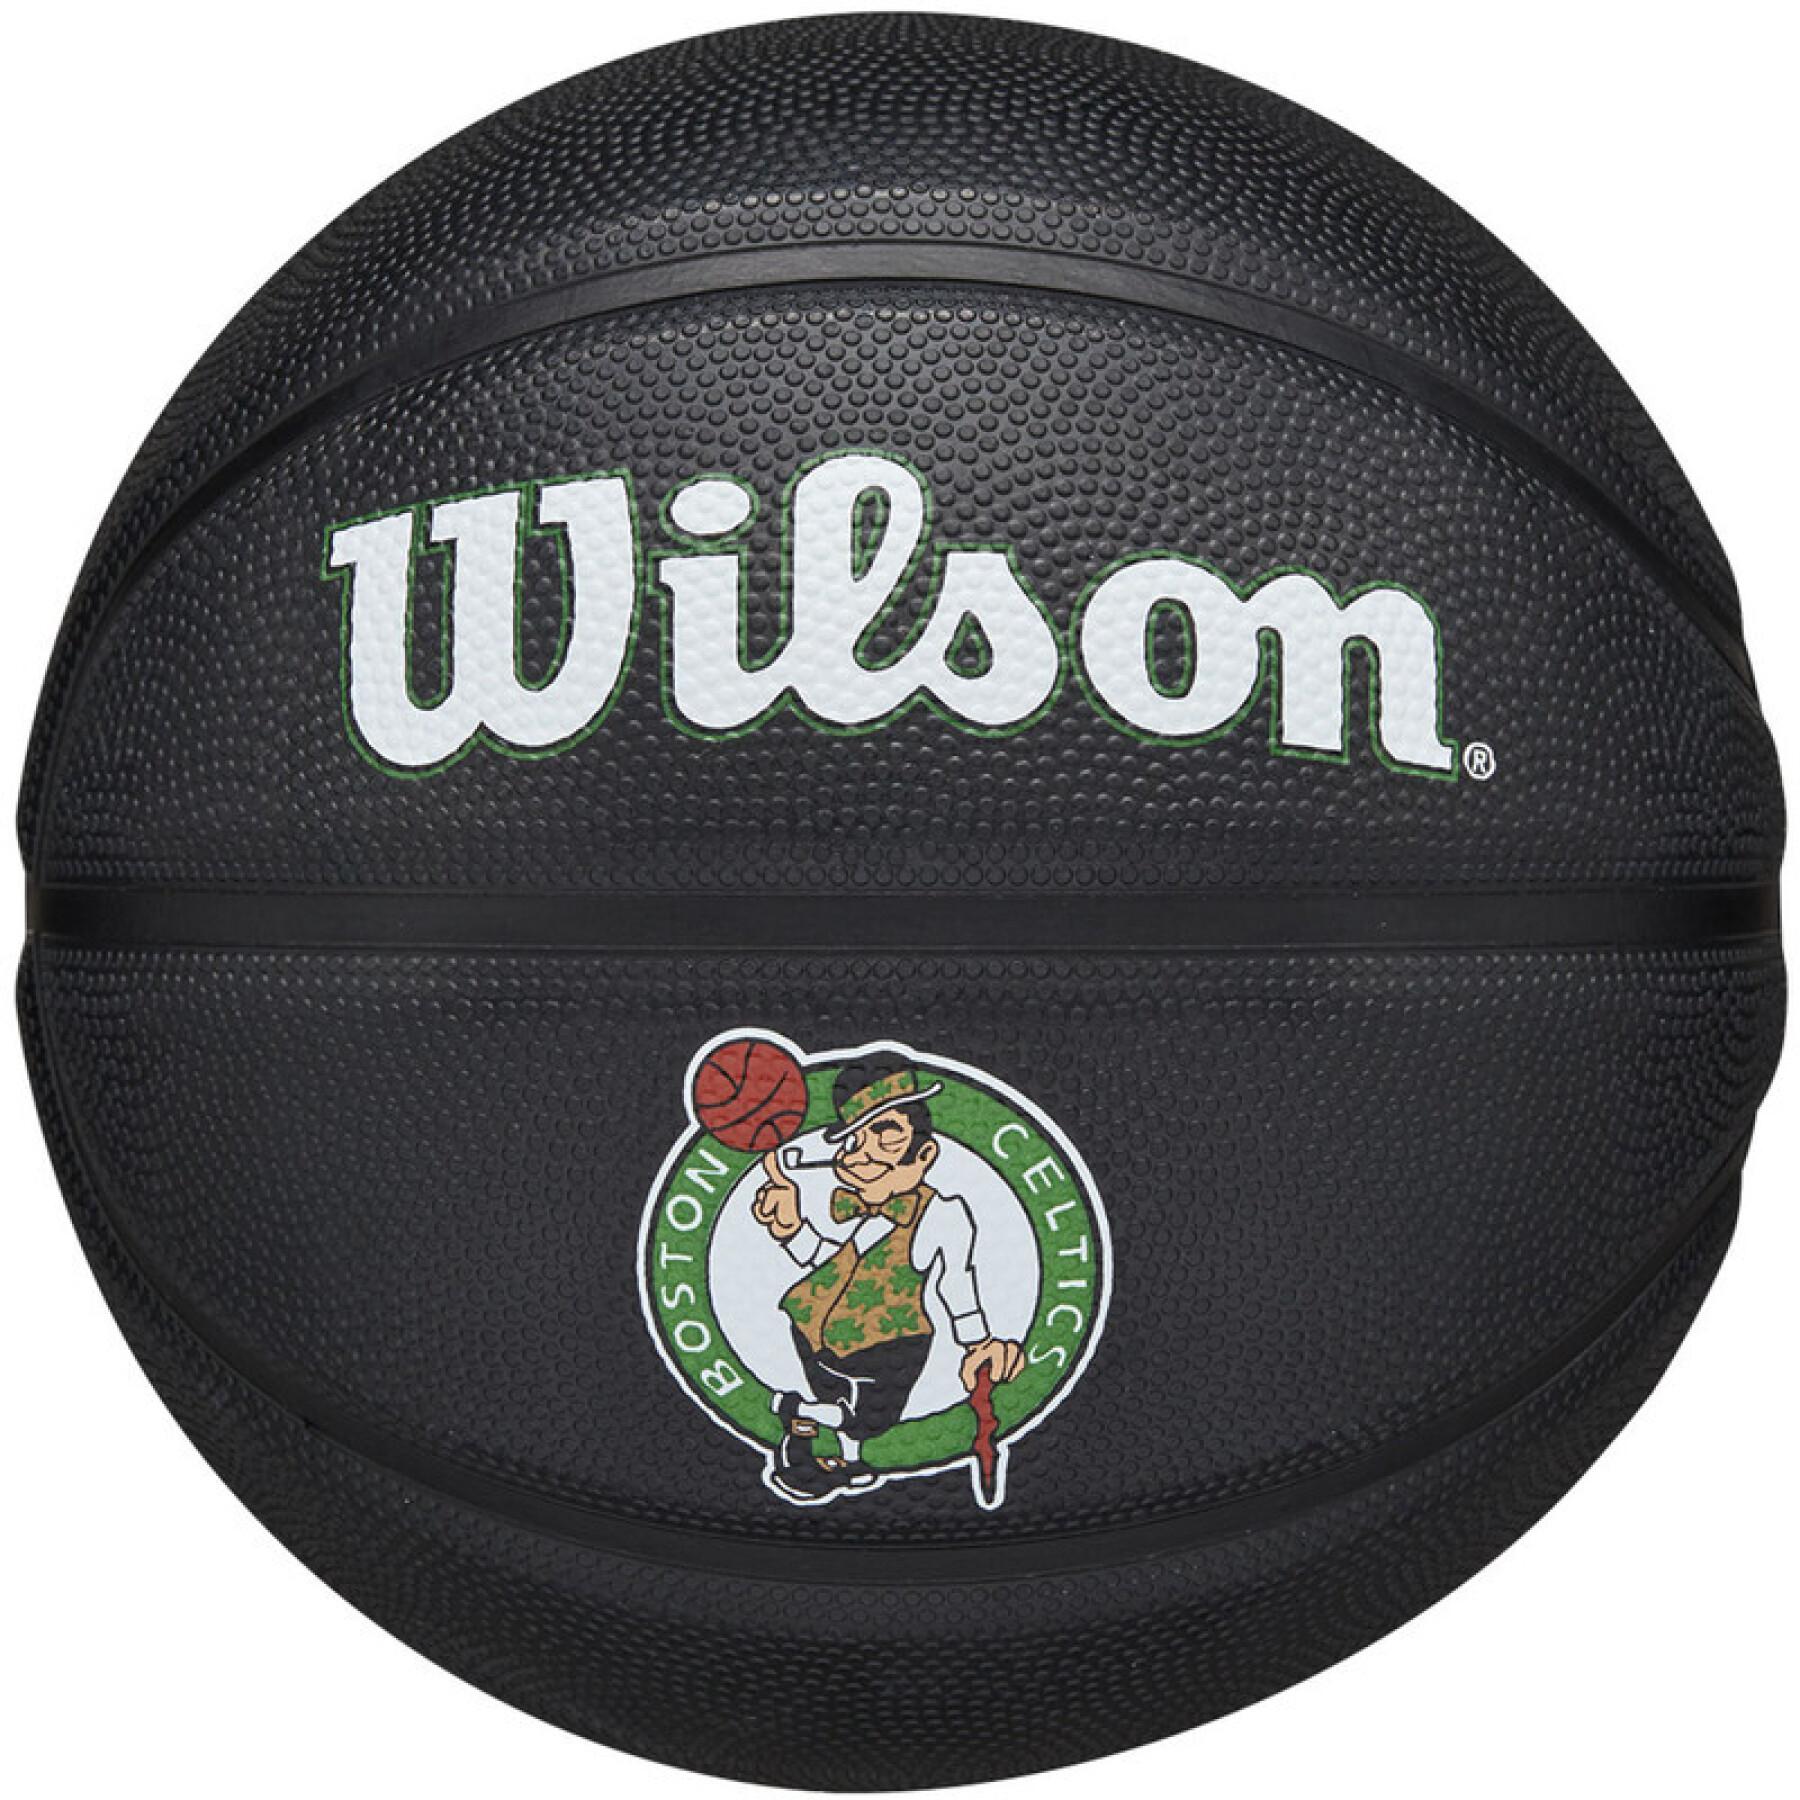 Mini-Basketball nba Boston Celtics